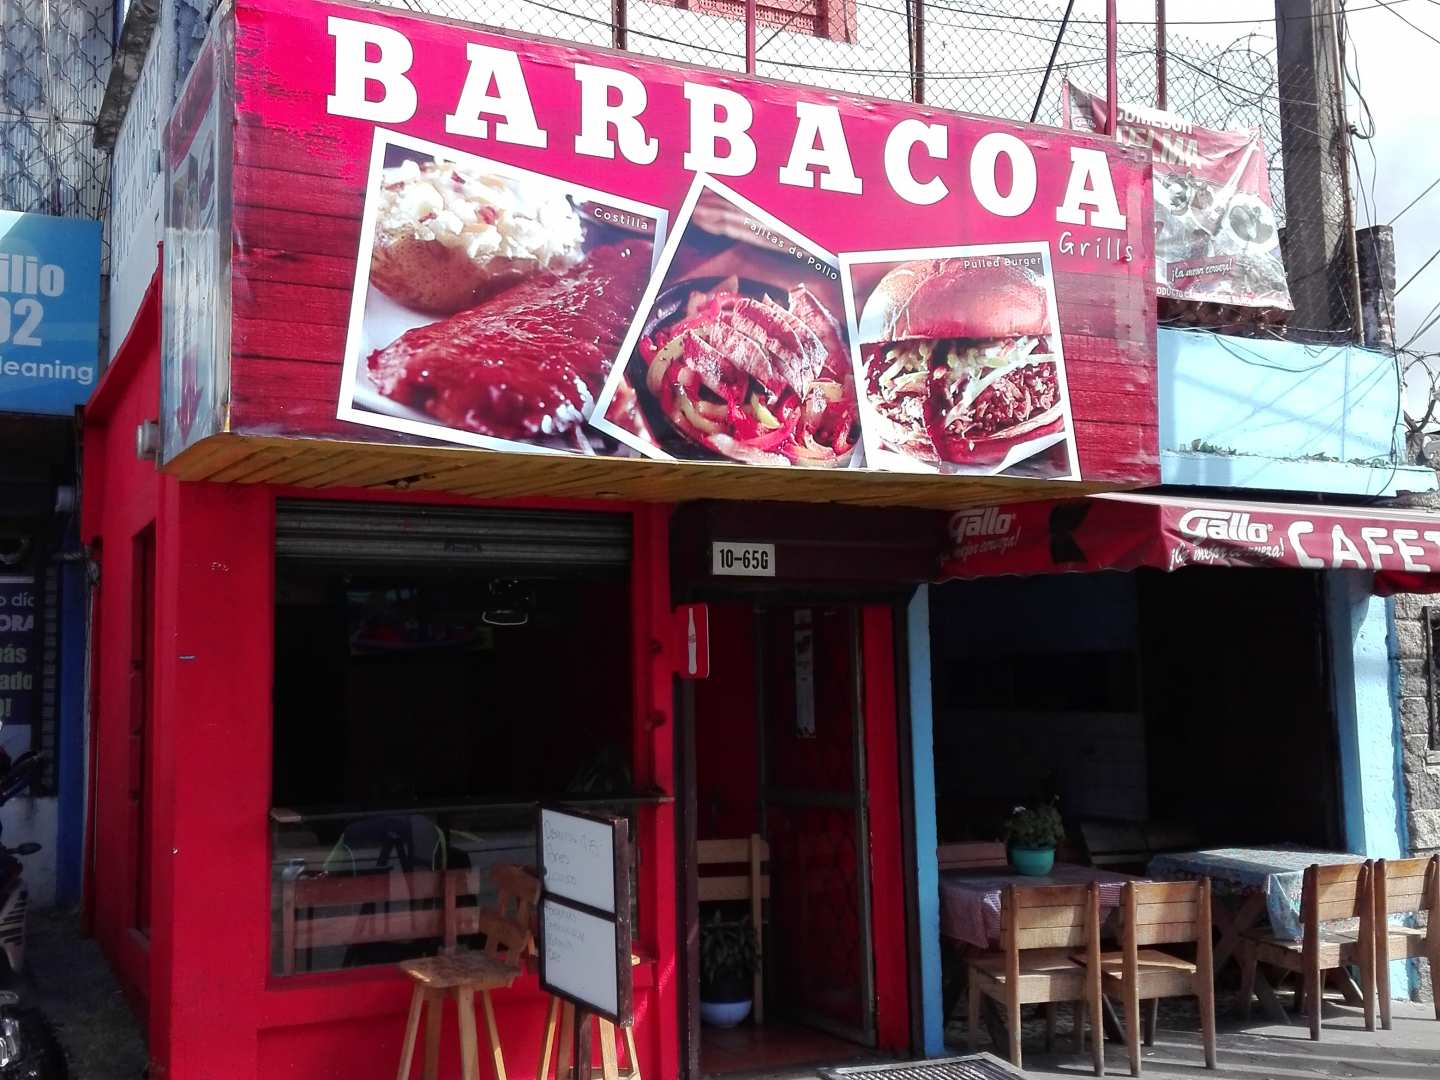 Barbacoa Grill